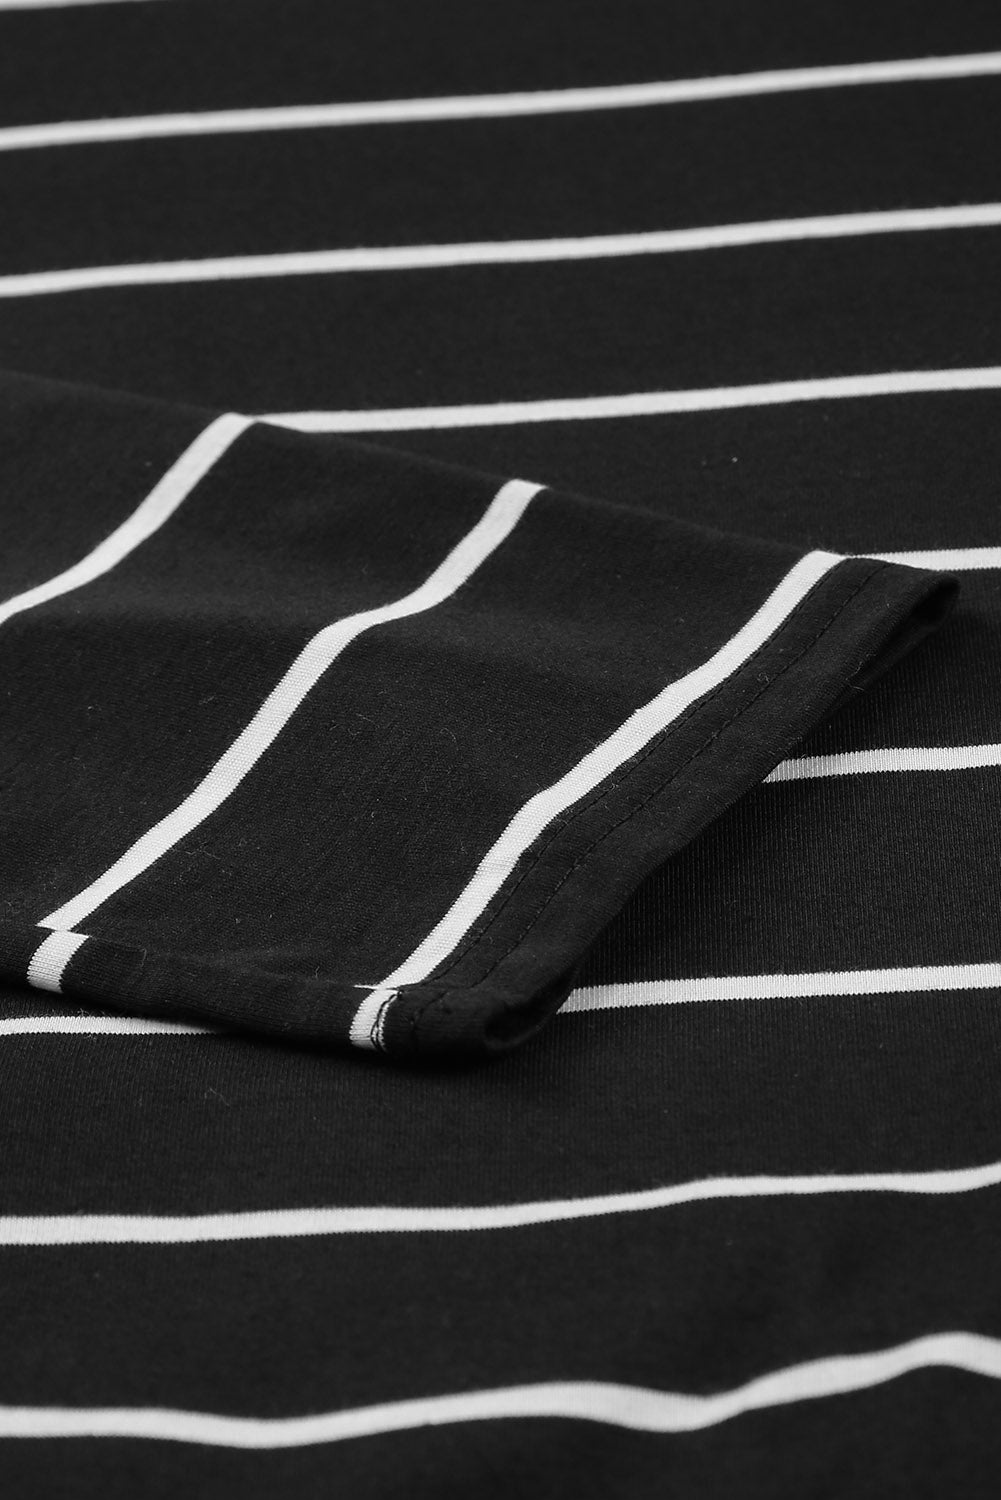 Black Striped Casual Slit High Waist Midi Dress